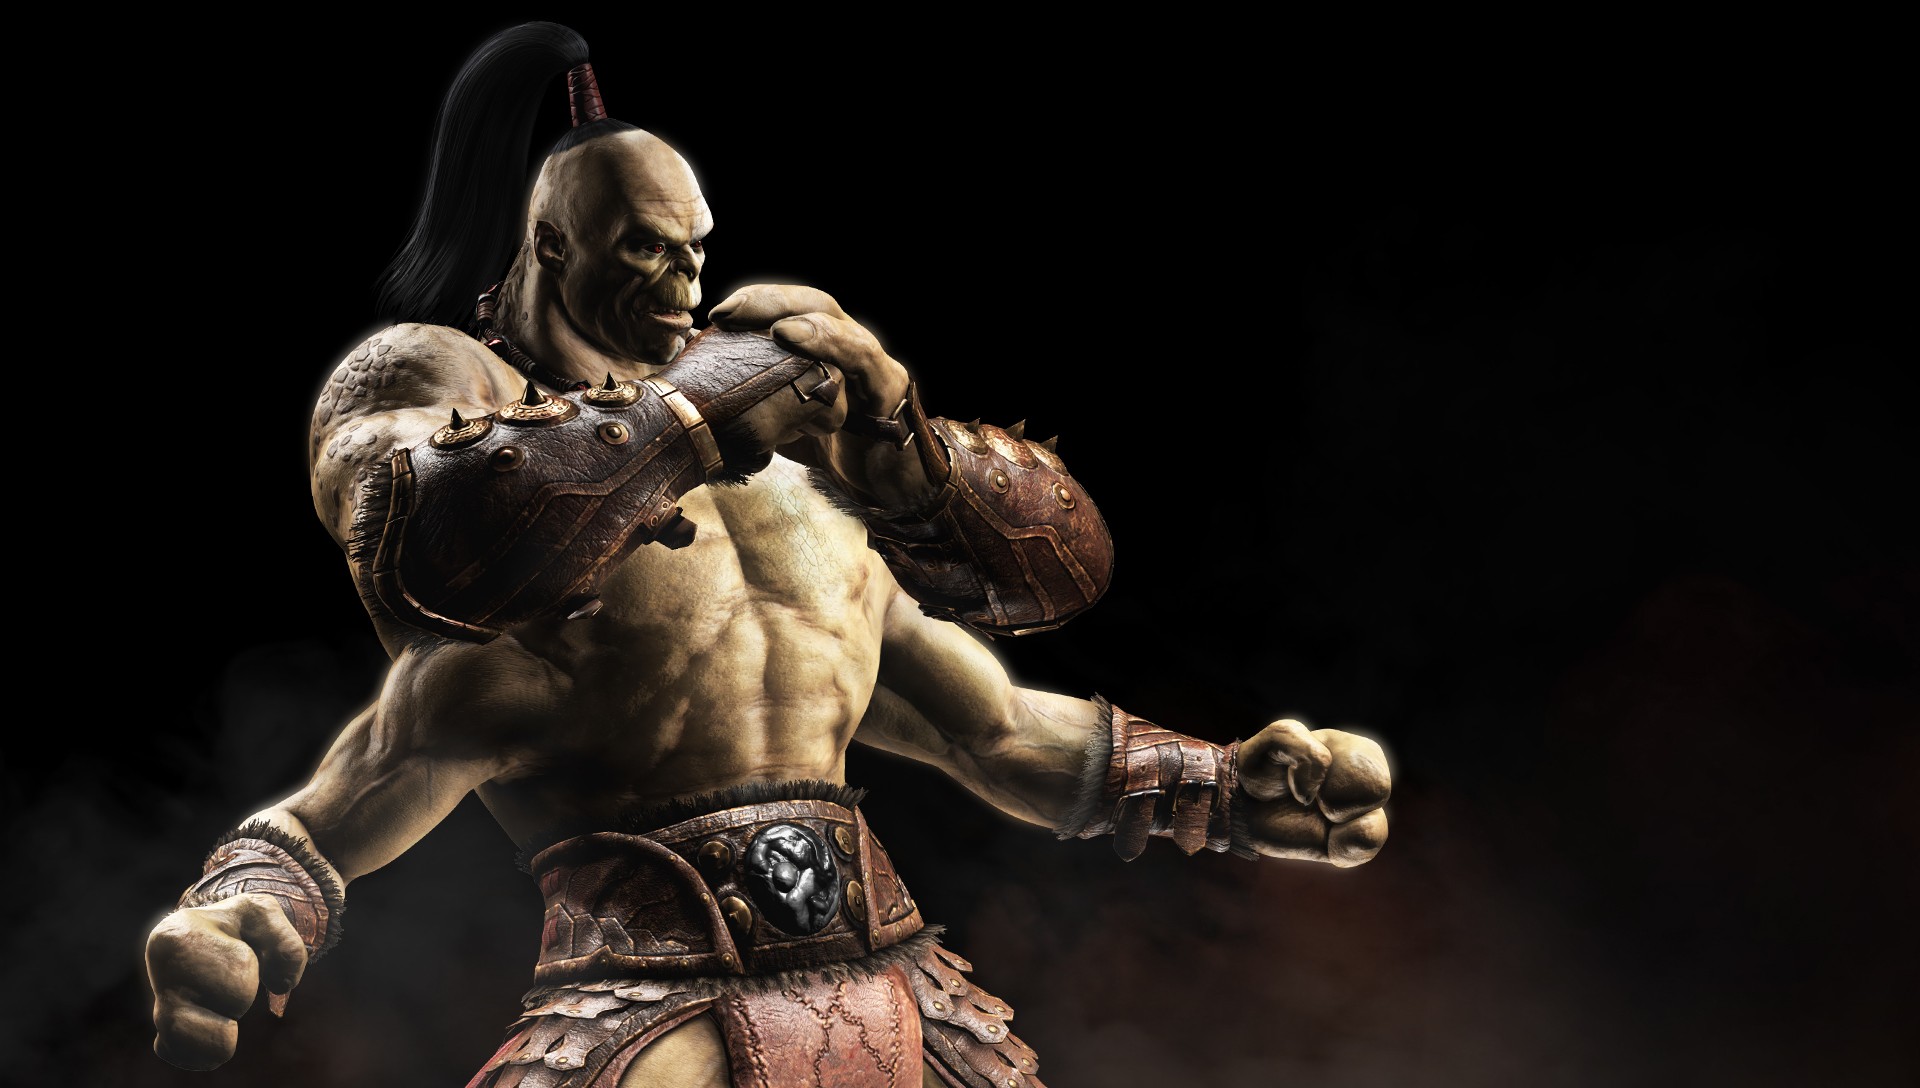 General 1920x1088 Mortal Kombat X PC gaming Four Arms video games video game characters video game art video game warriors